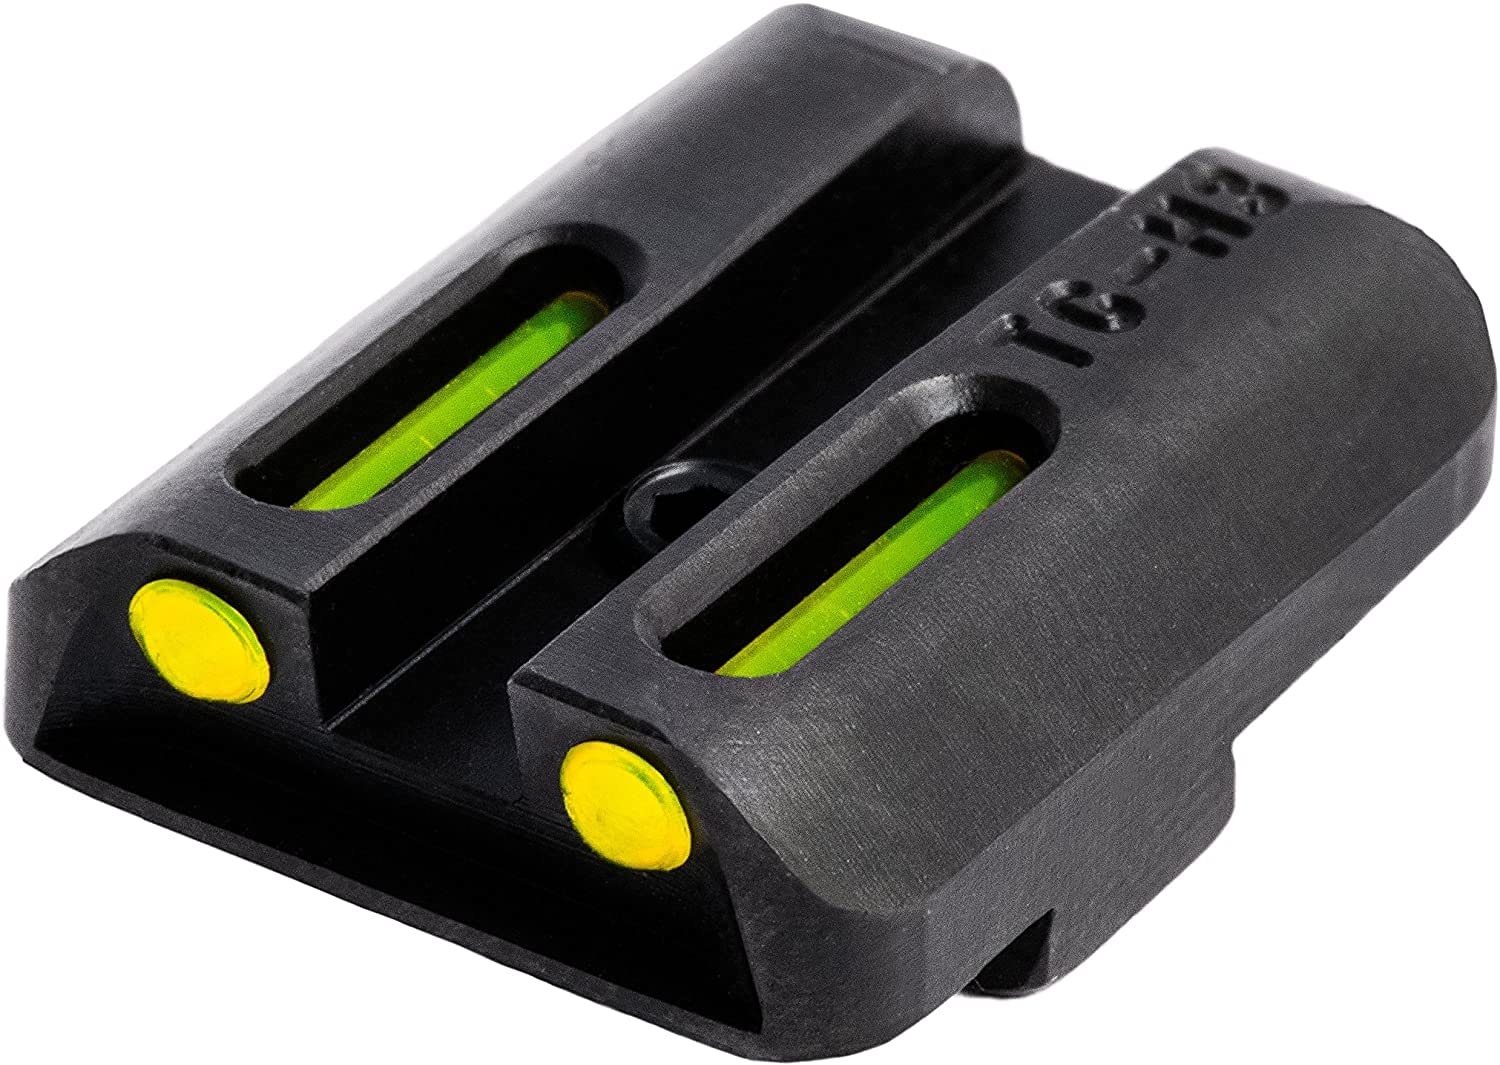 TruGlo TFO Tritium Fiber Optic Handgun Laser Sight Accessories Set with Rear Colors, Fits Glock 17/17L, 19, 22, 23, 24 Models and More, Yellow Light